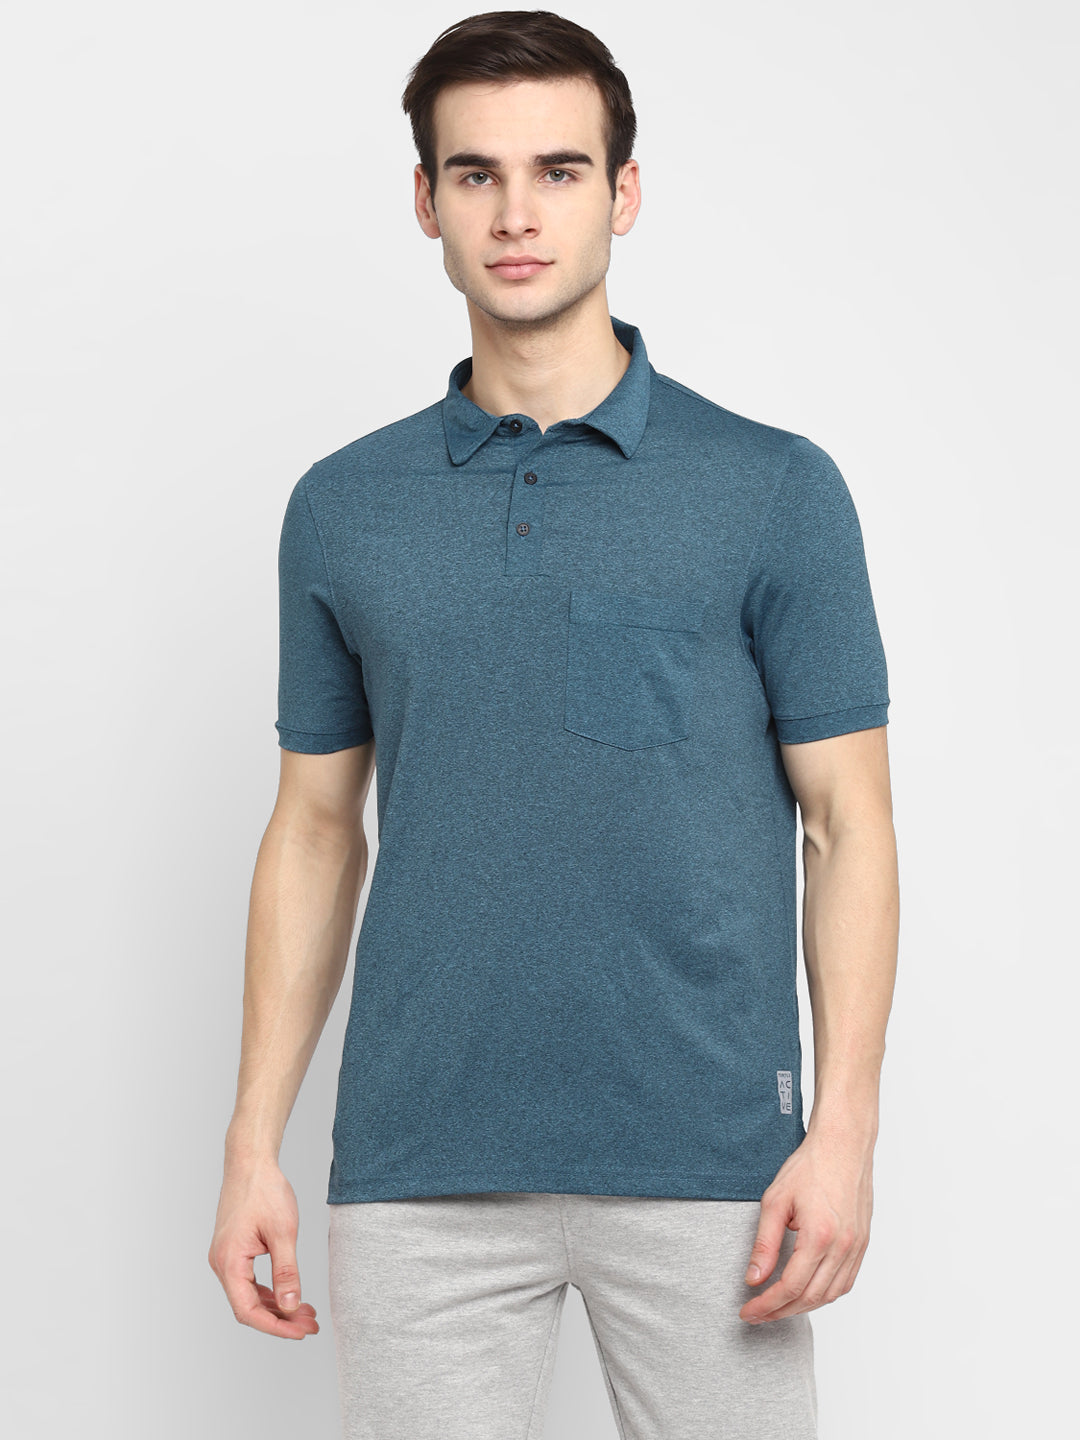 Teal Half Sleeve Polo T-Shirt for Men